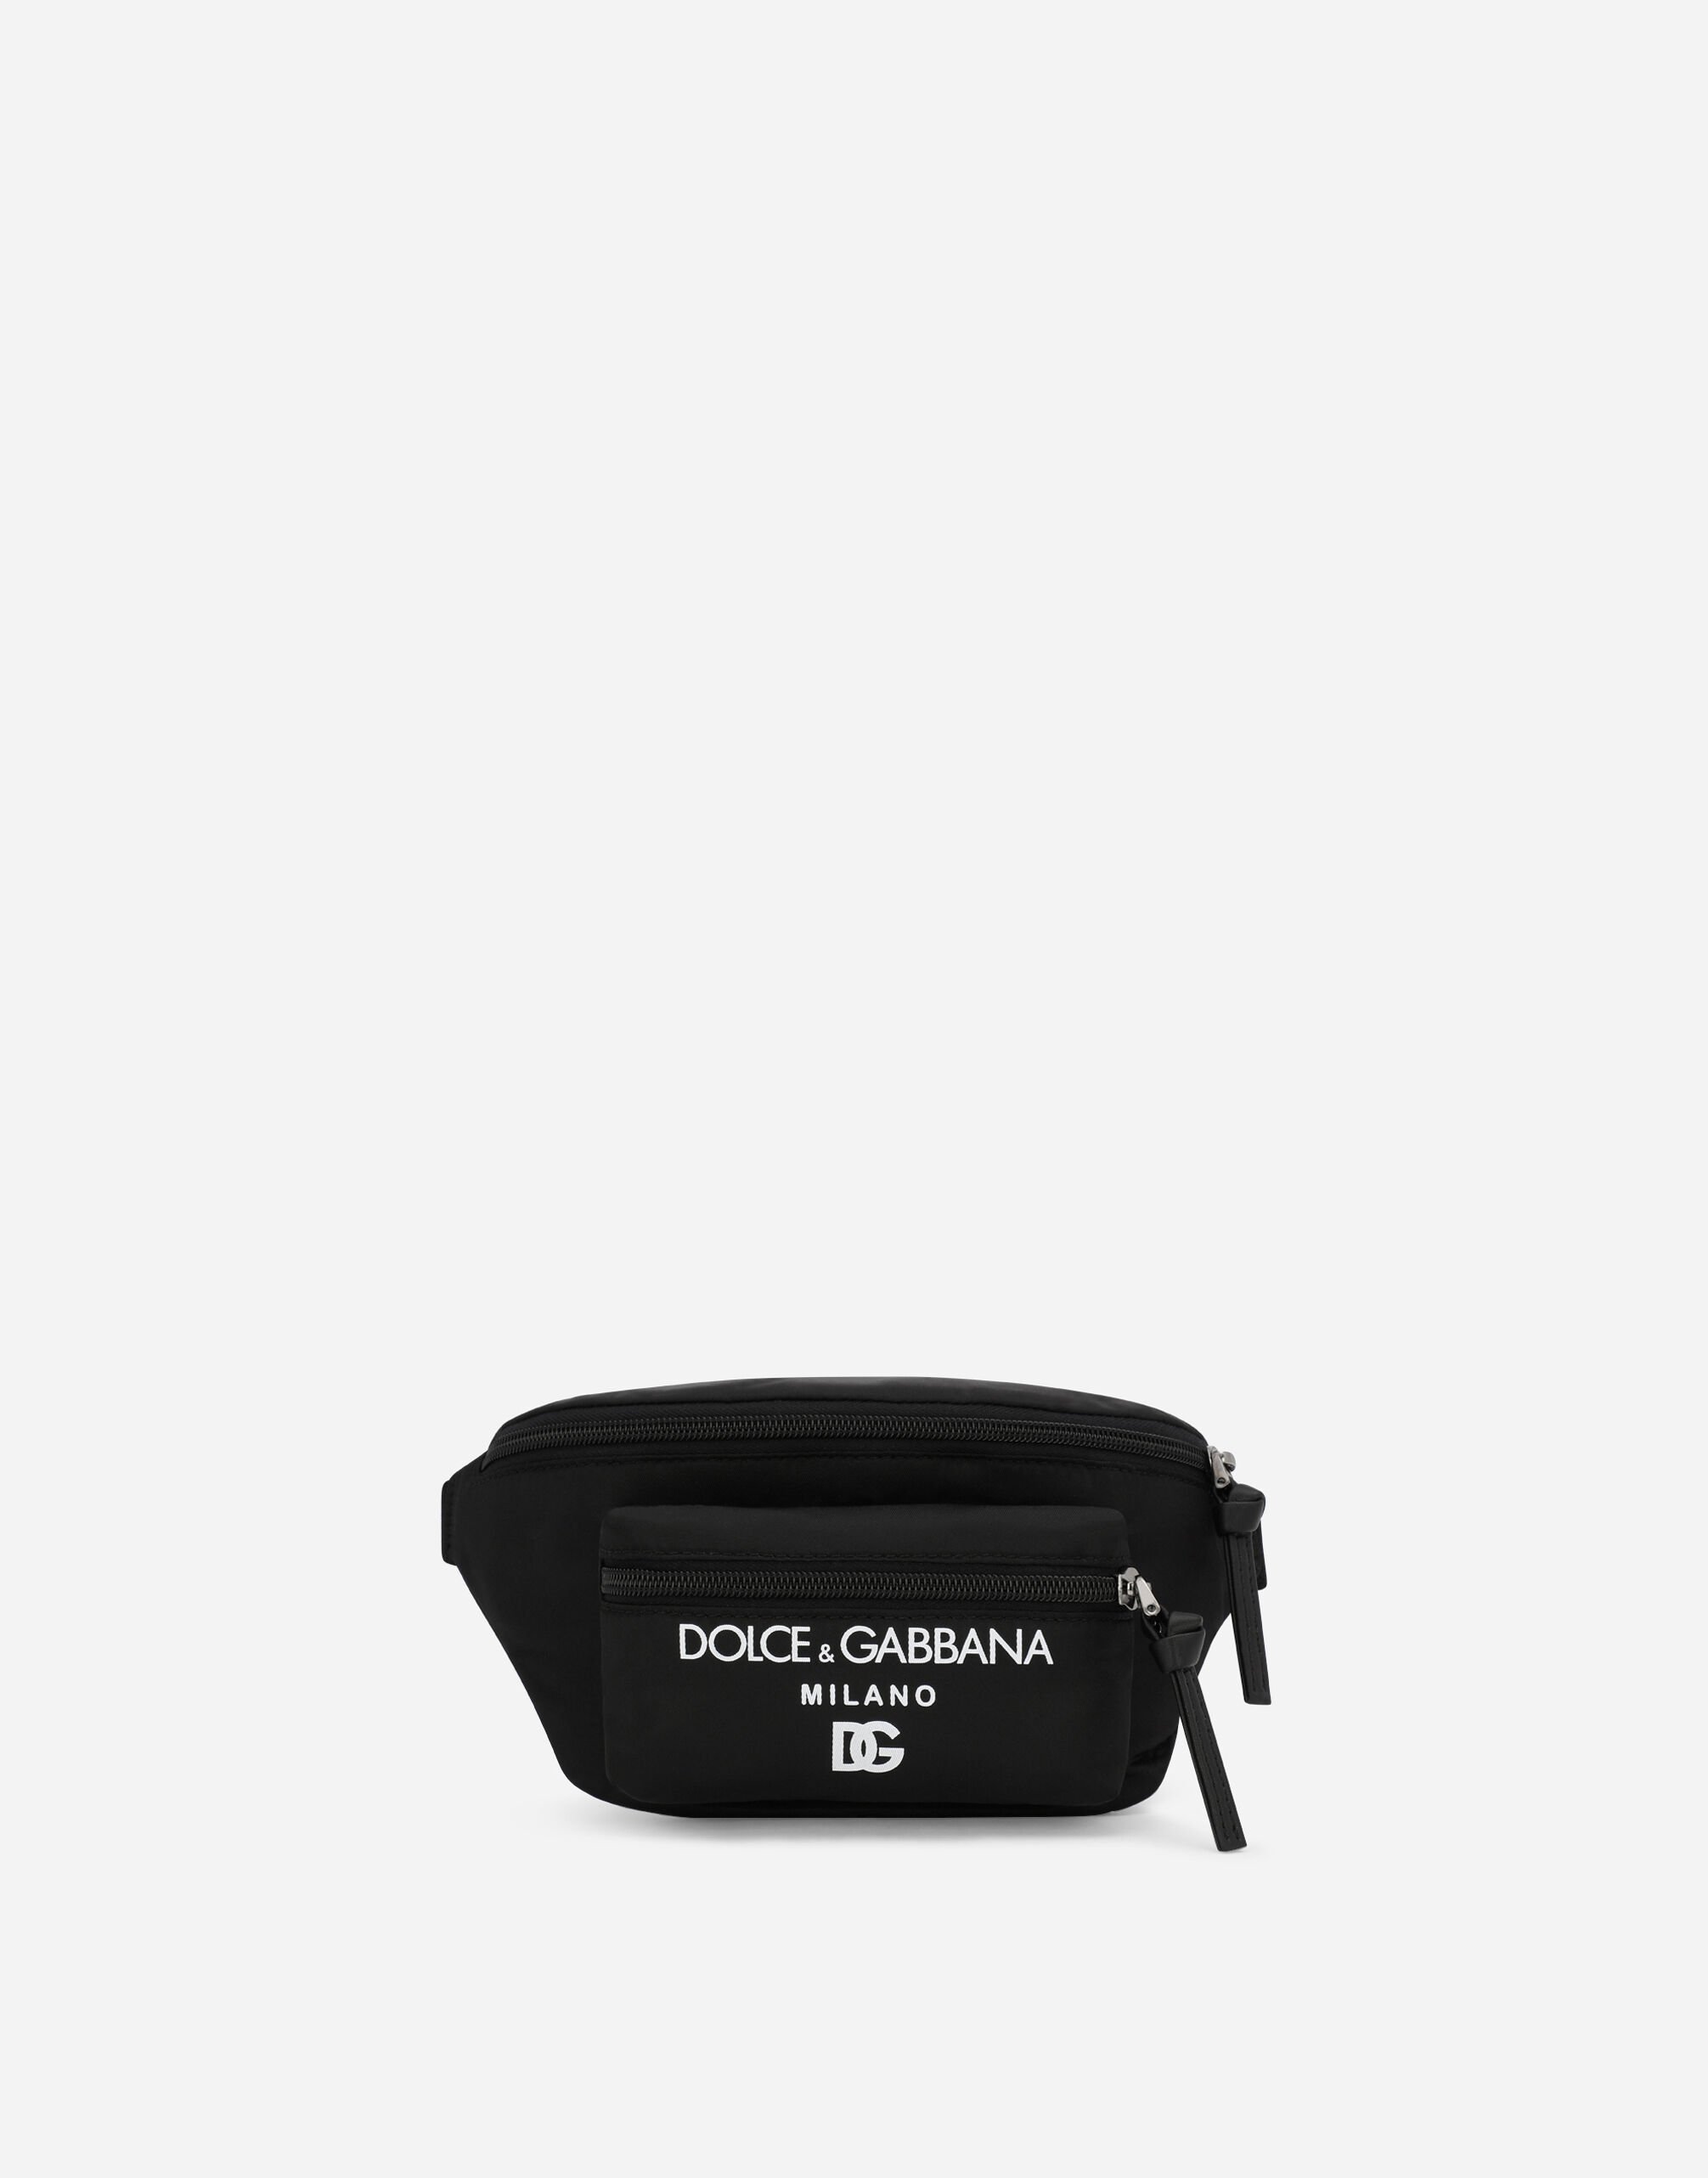 Dolce & Gabbana حقيبة خصر نايلون بطبعة DOLCE&GABBANA ميلانو أسود EB0003AB000